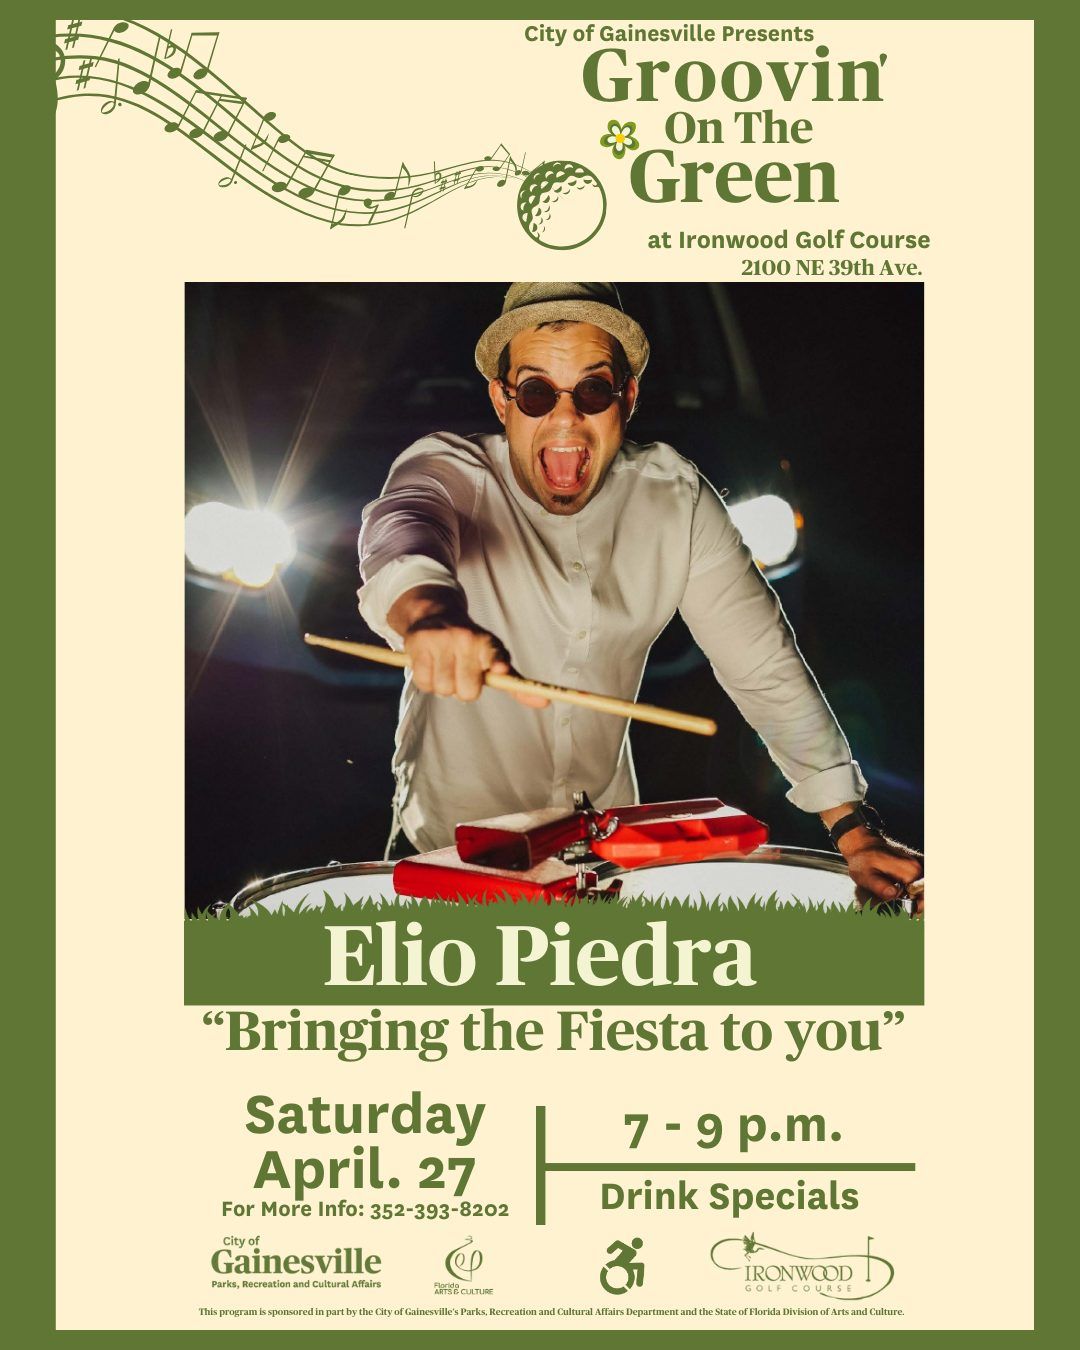 Elio Piedra Brings the Fiesta at Groovin' On the Green Concert Series